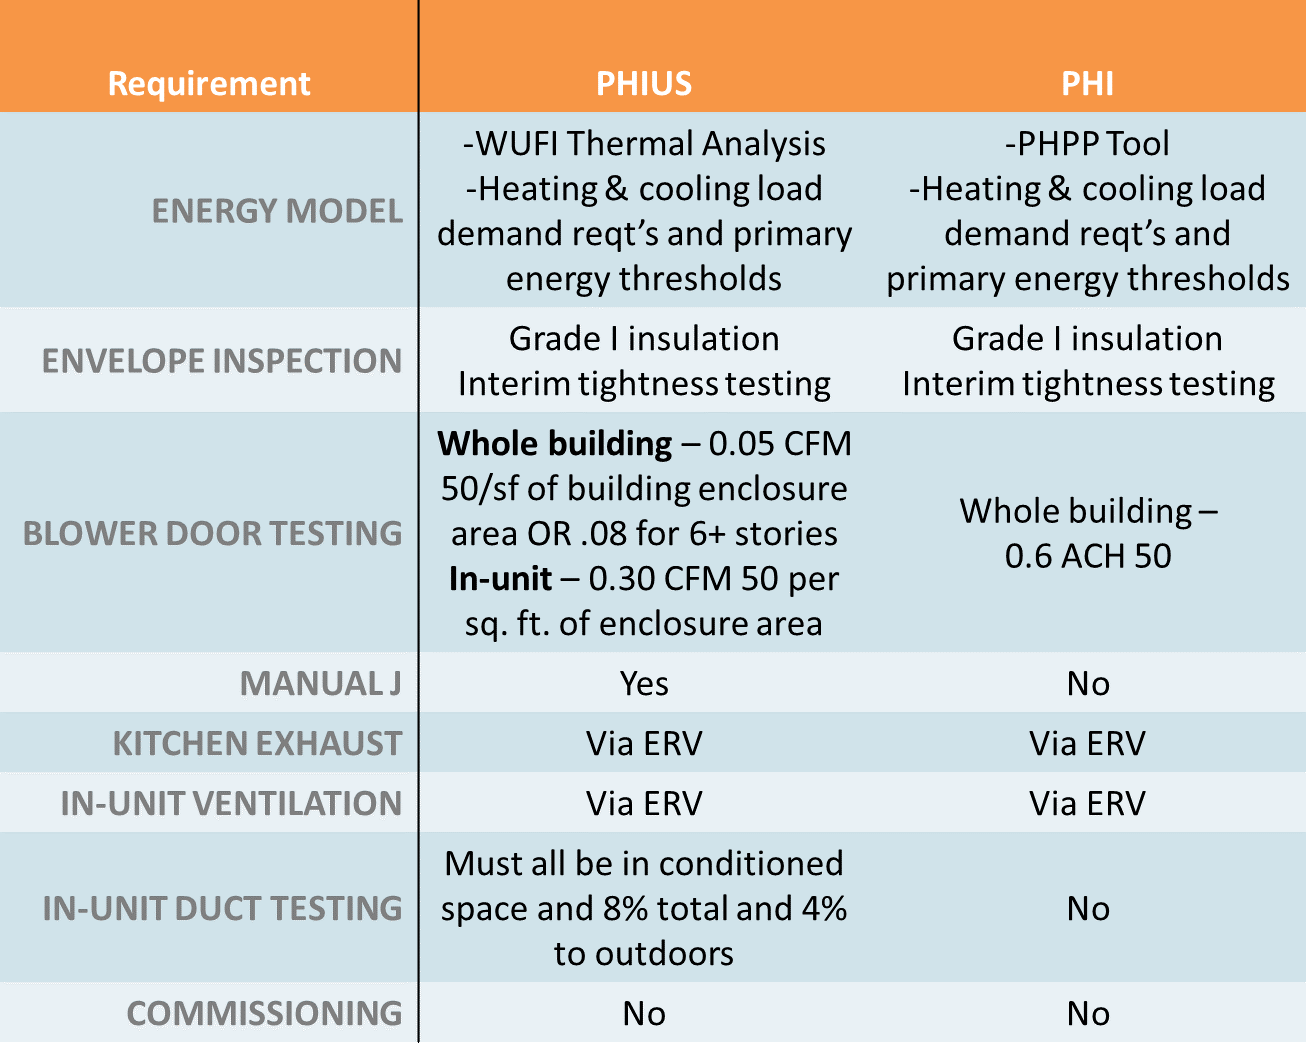 Passive House comparison (PHI vs PHIUS)